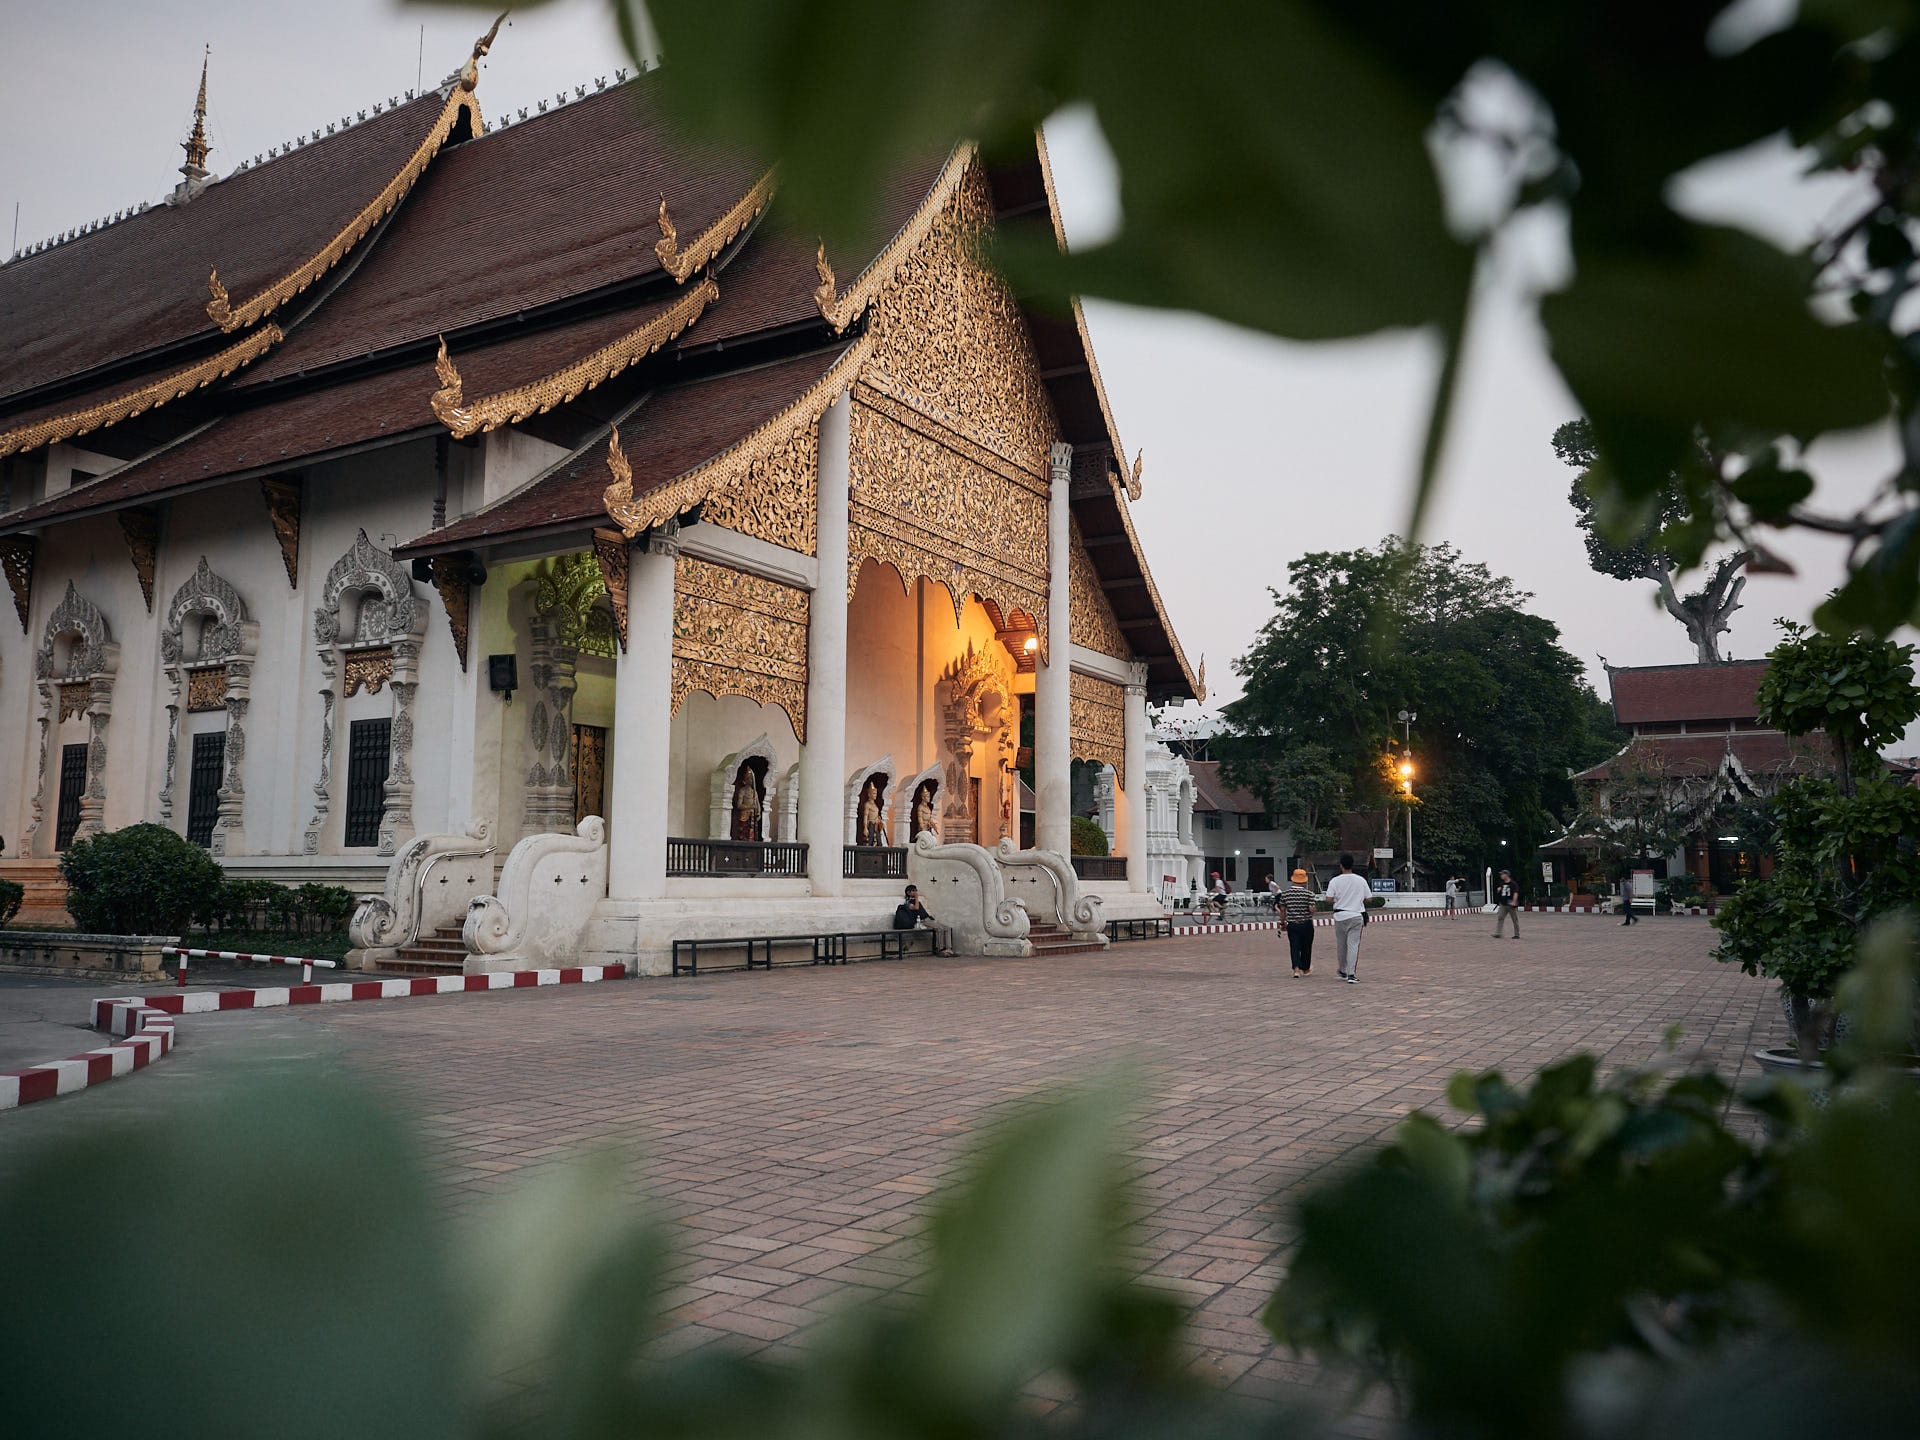 Chiang Mai - co zobaczyć w 2-3 dni?